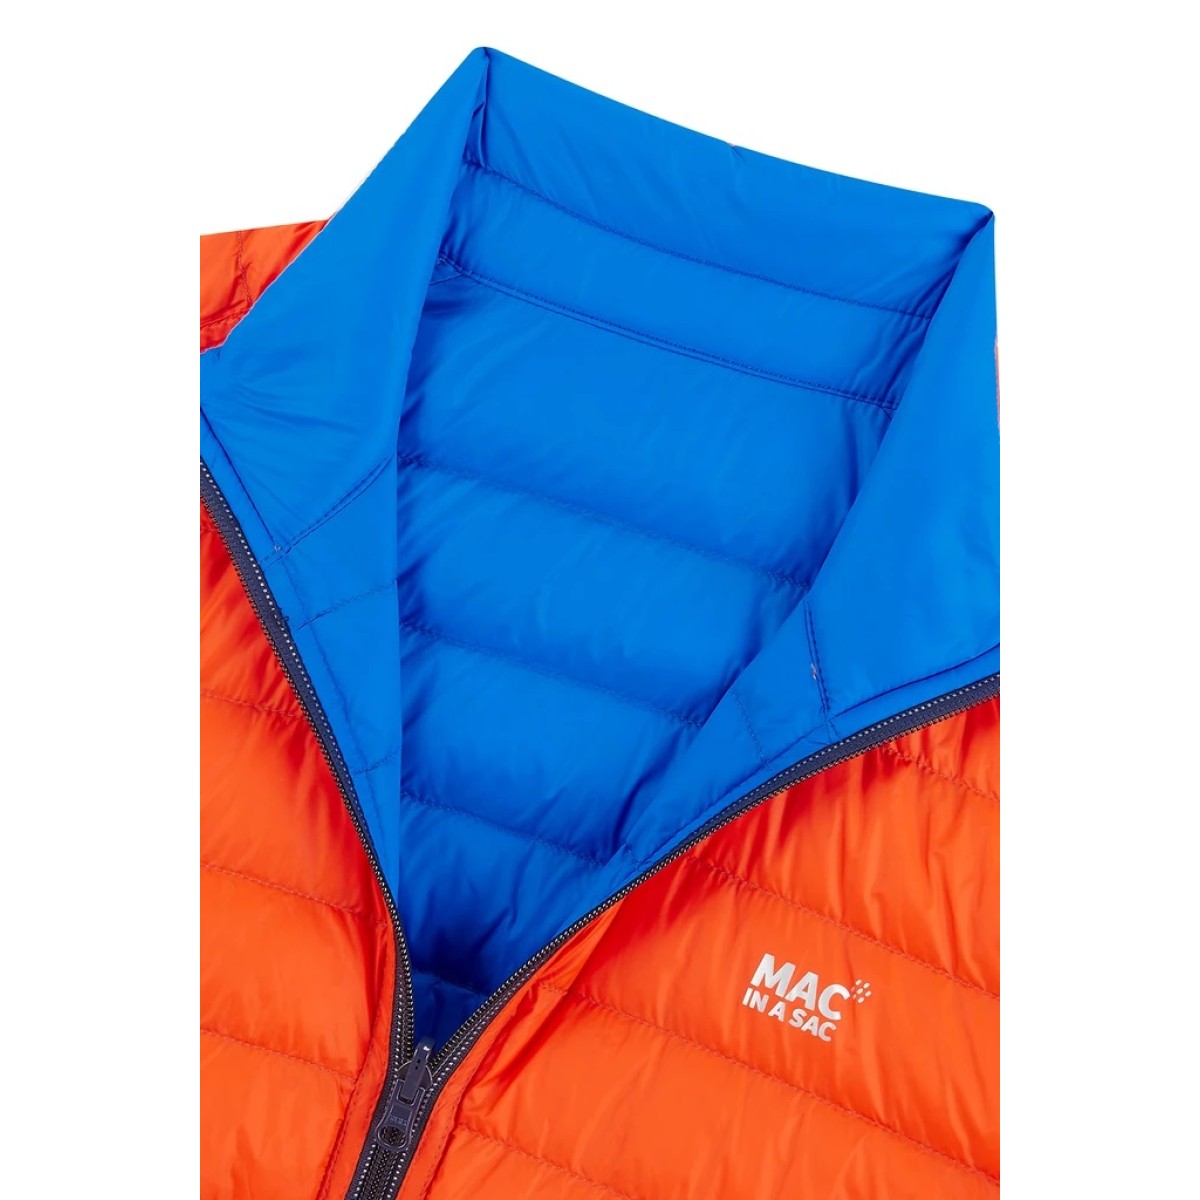 Down jacket reversible Mac in a sac Polar Down royal/flame  MAC IN A SAC - view 7